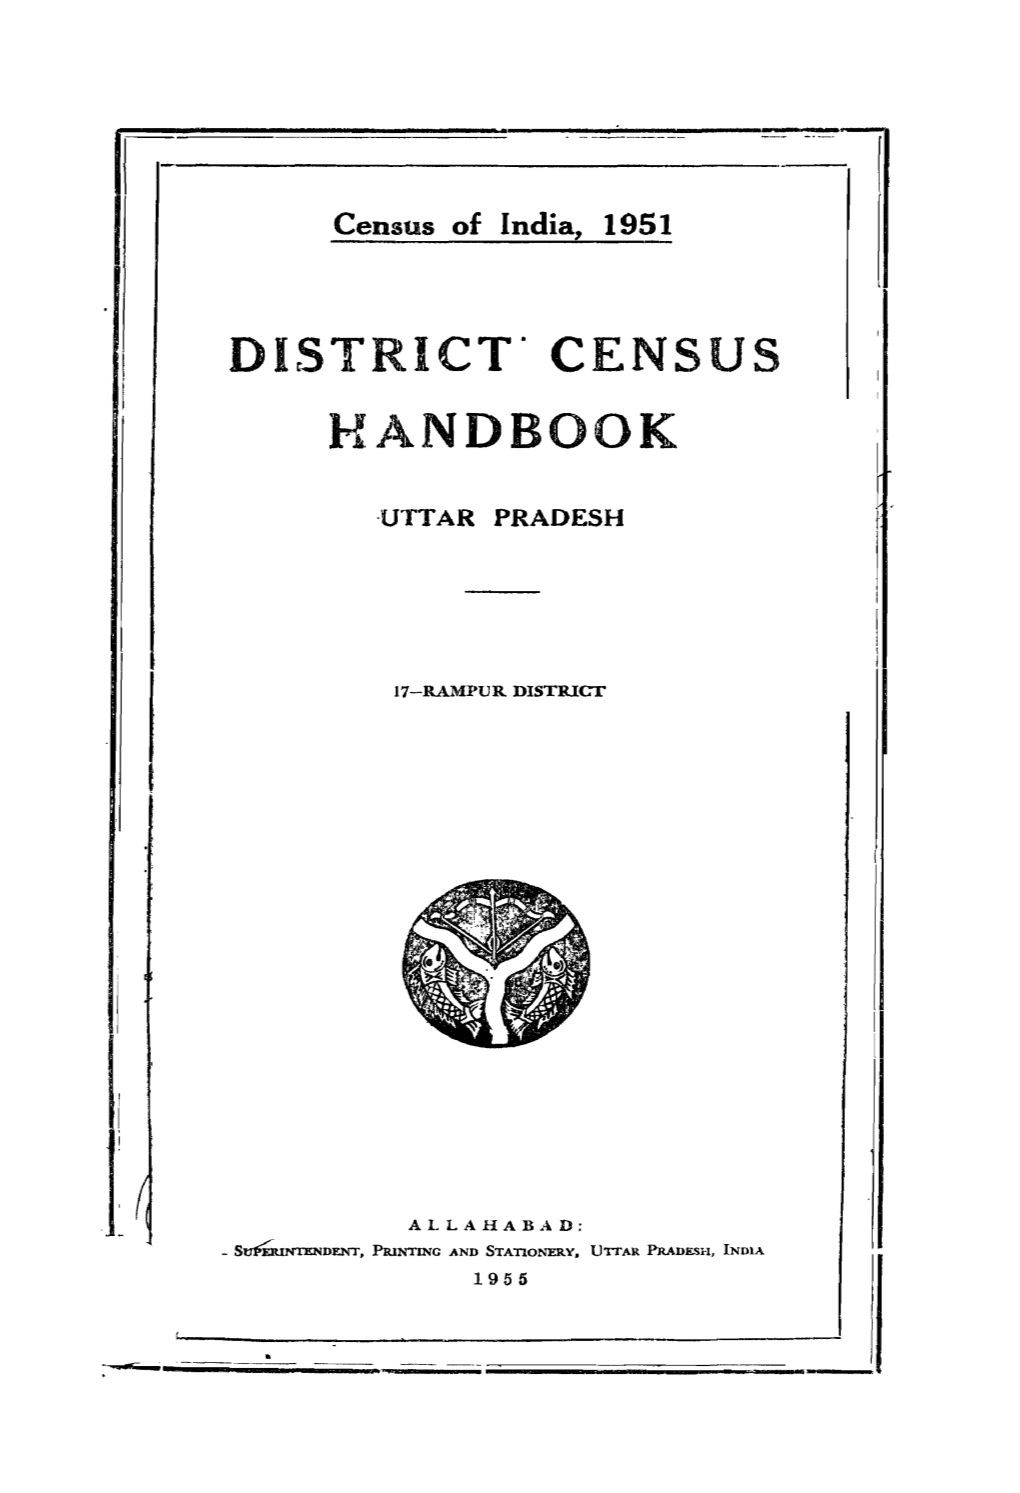 District Census Handbook, 17-Rampur, Uttar Pradesh